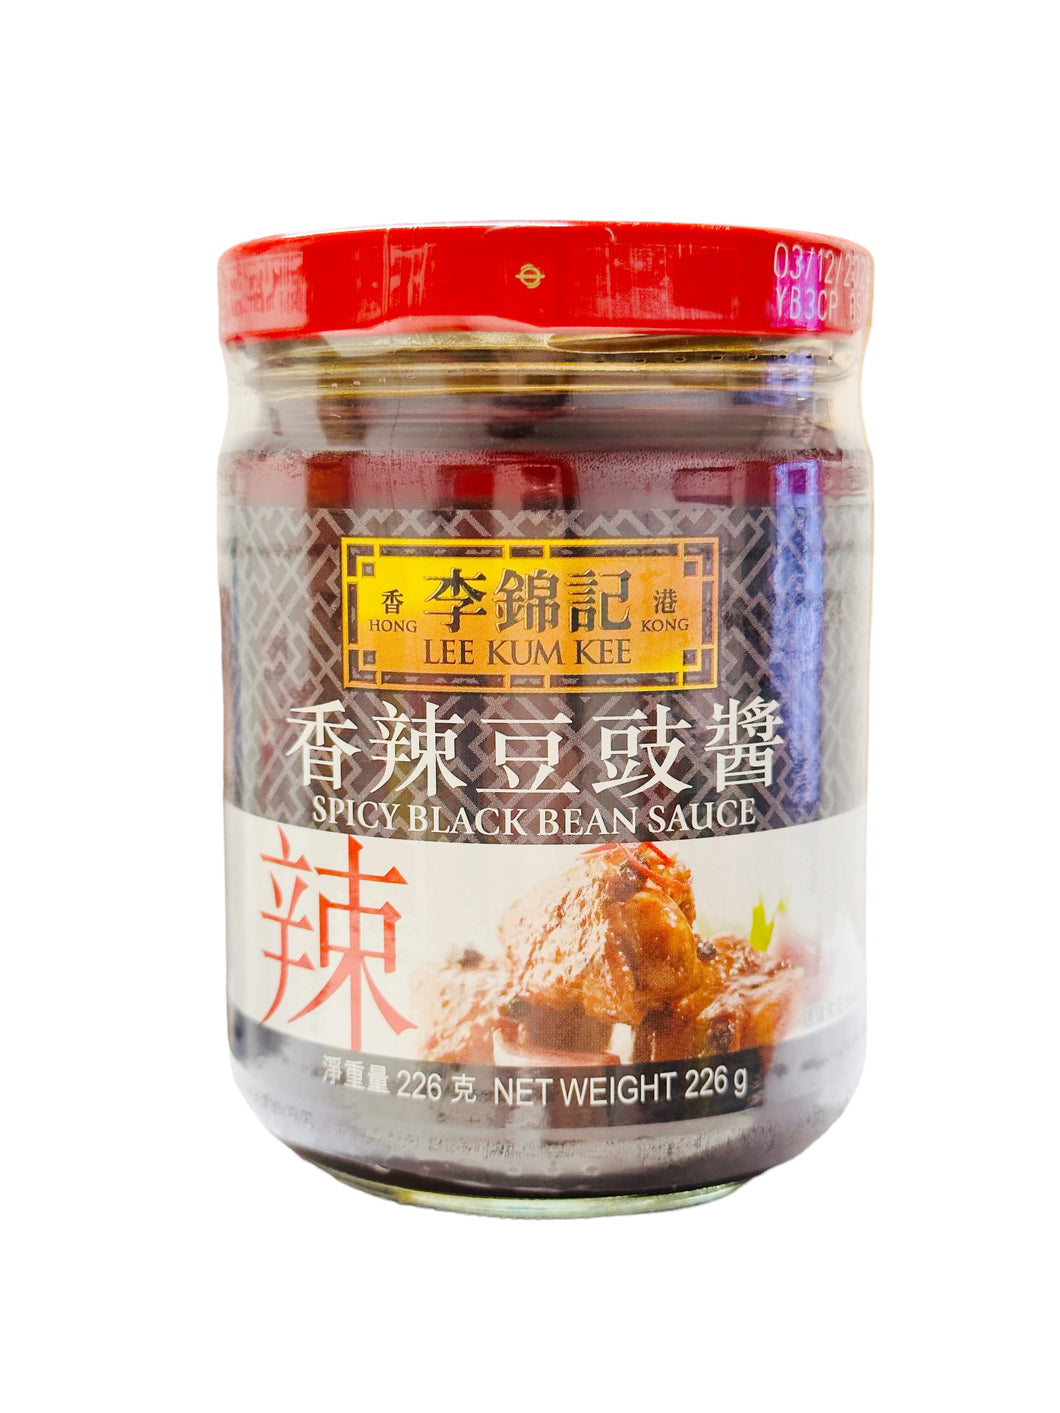 LKK Spicy Black Bean Sauce 226g李锦记香辣豆豉酱